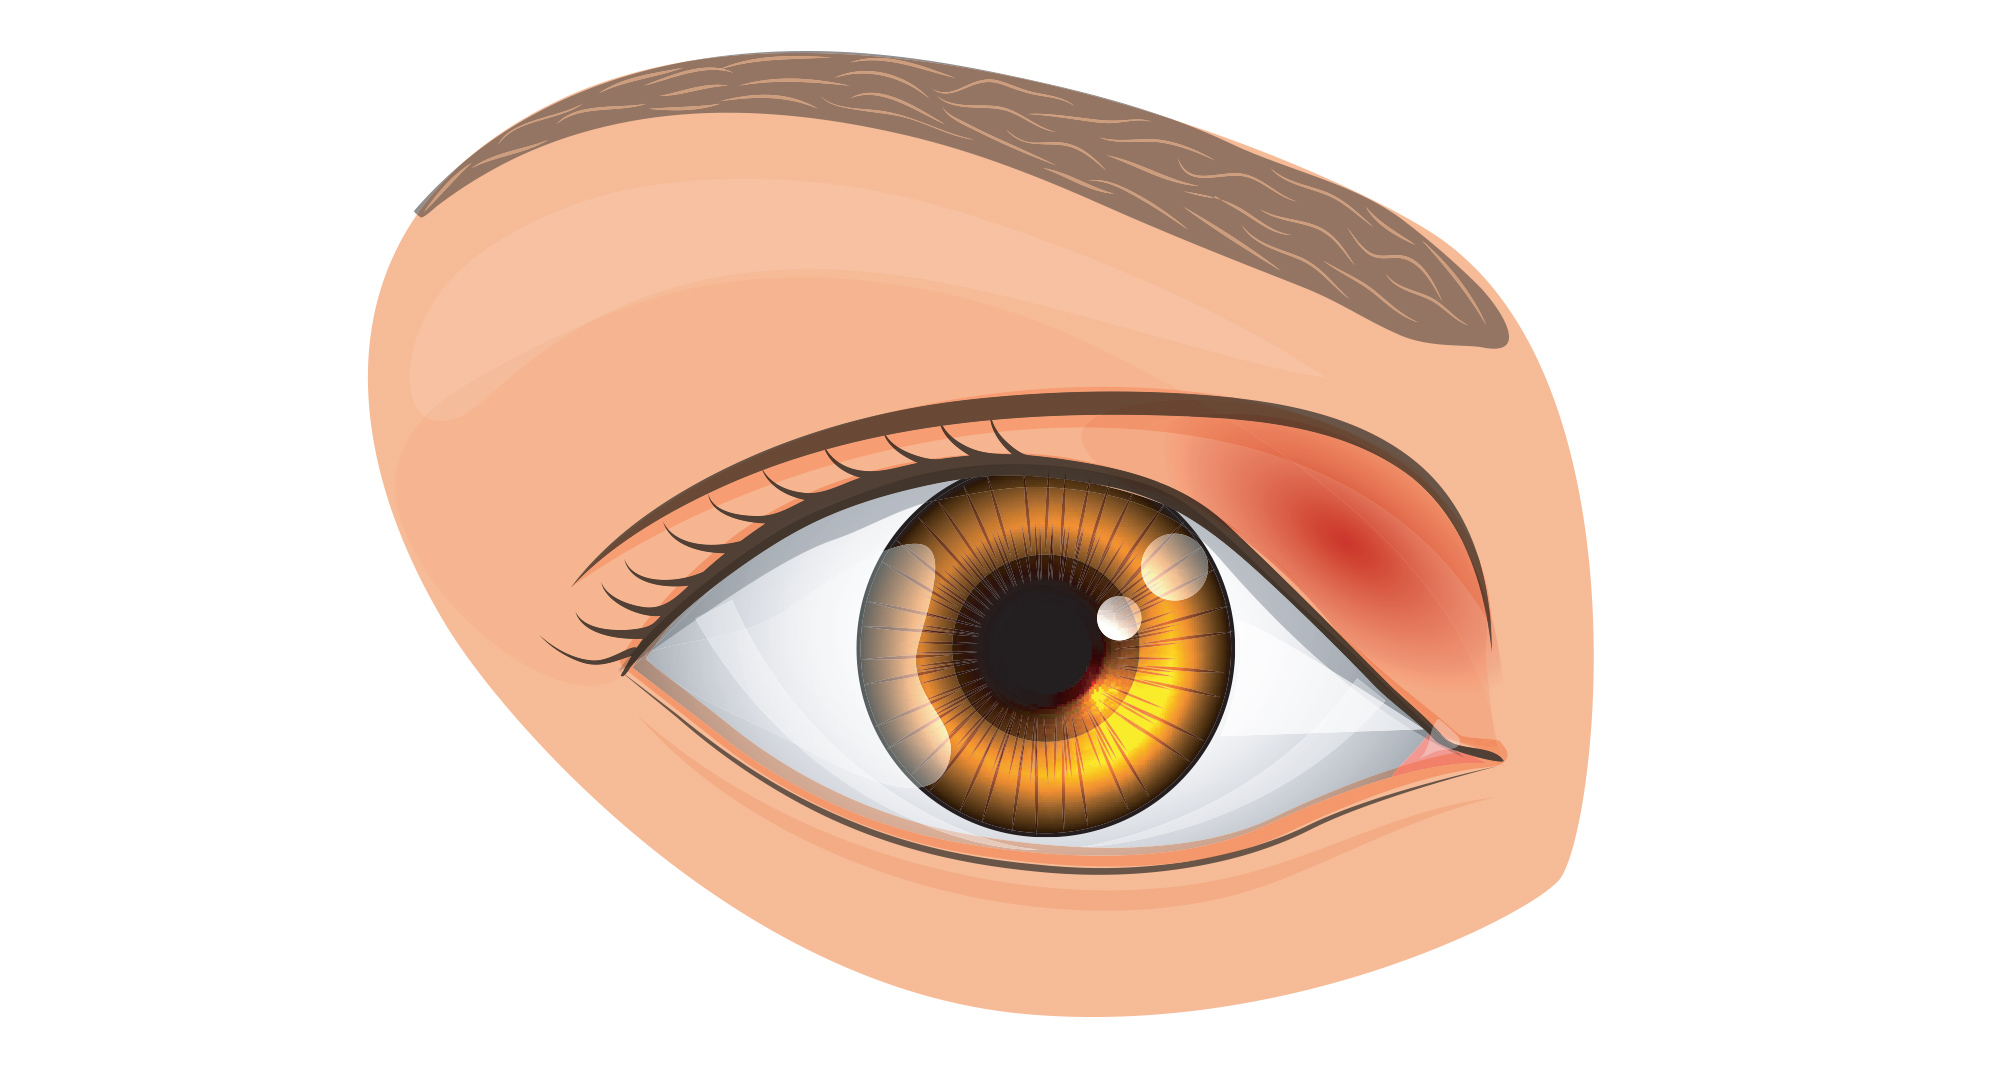 Illustration of eye with stye